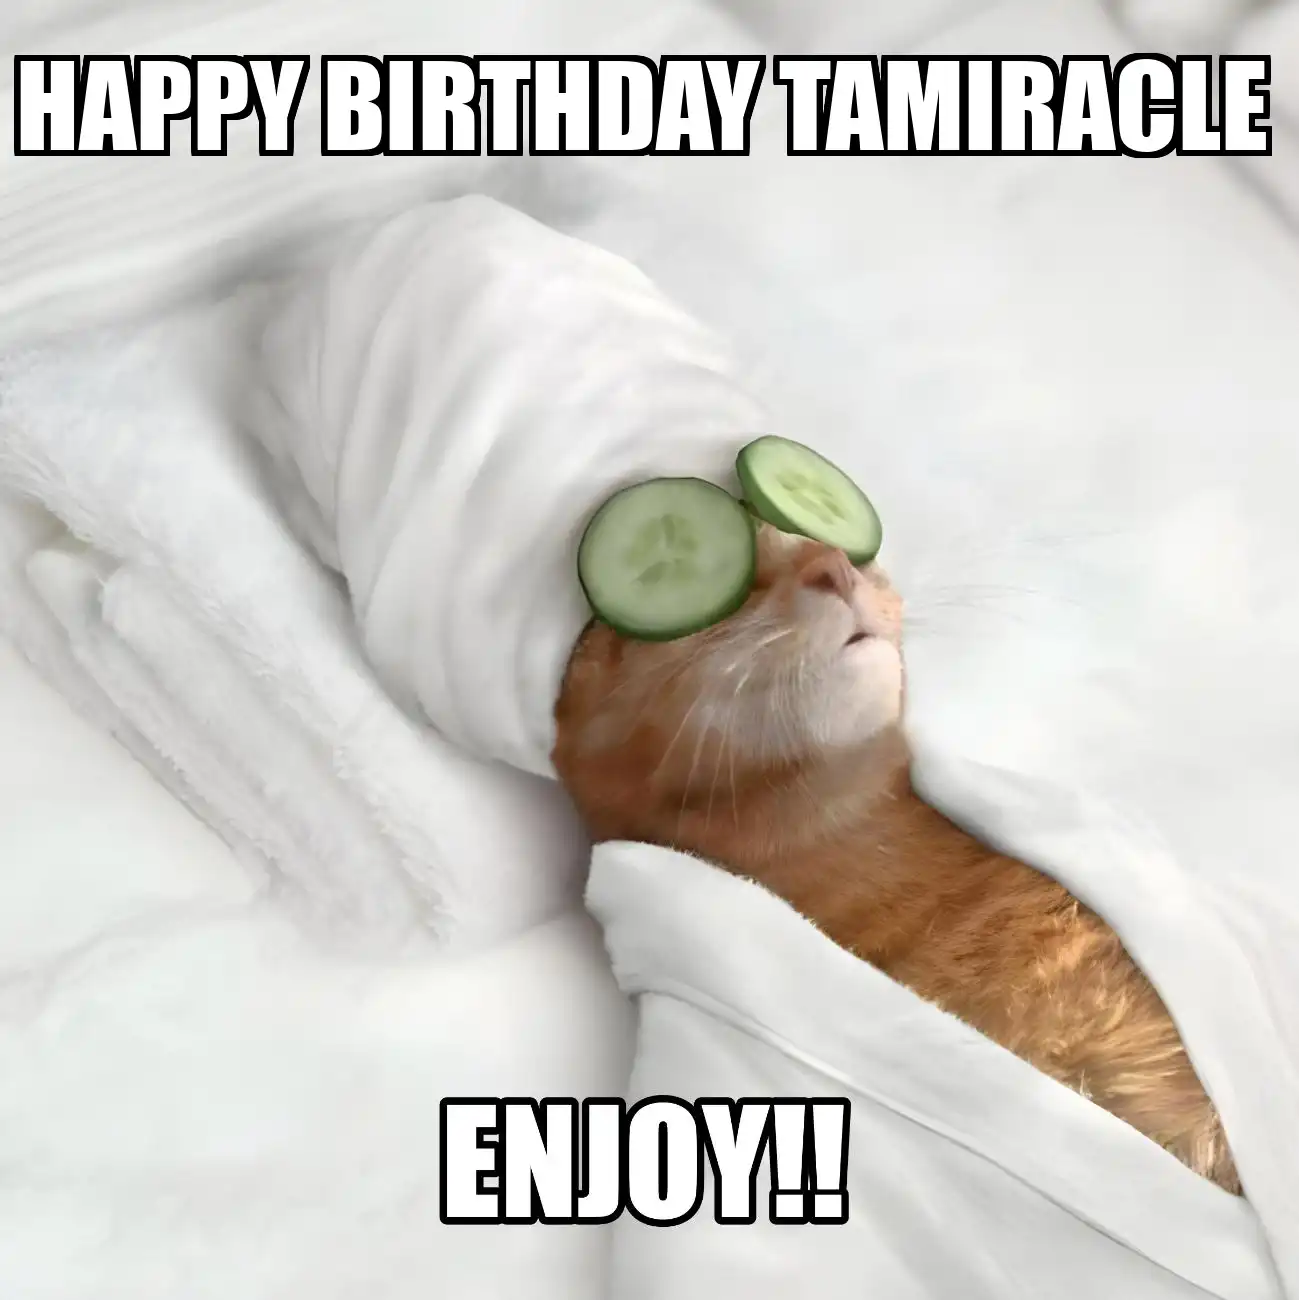 Happy Birthday Tamiracle Enjoy Cat Meme